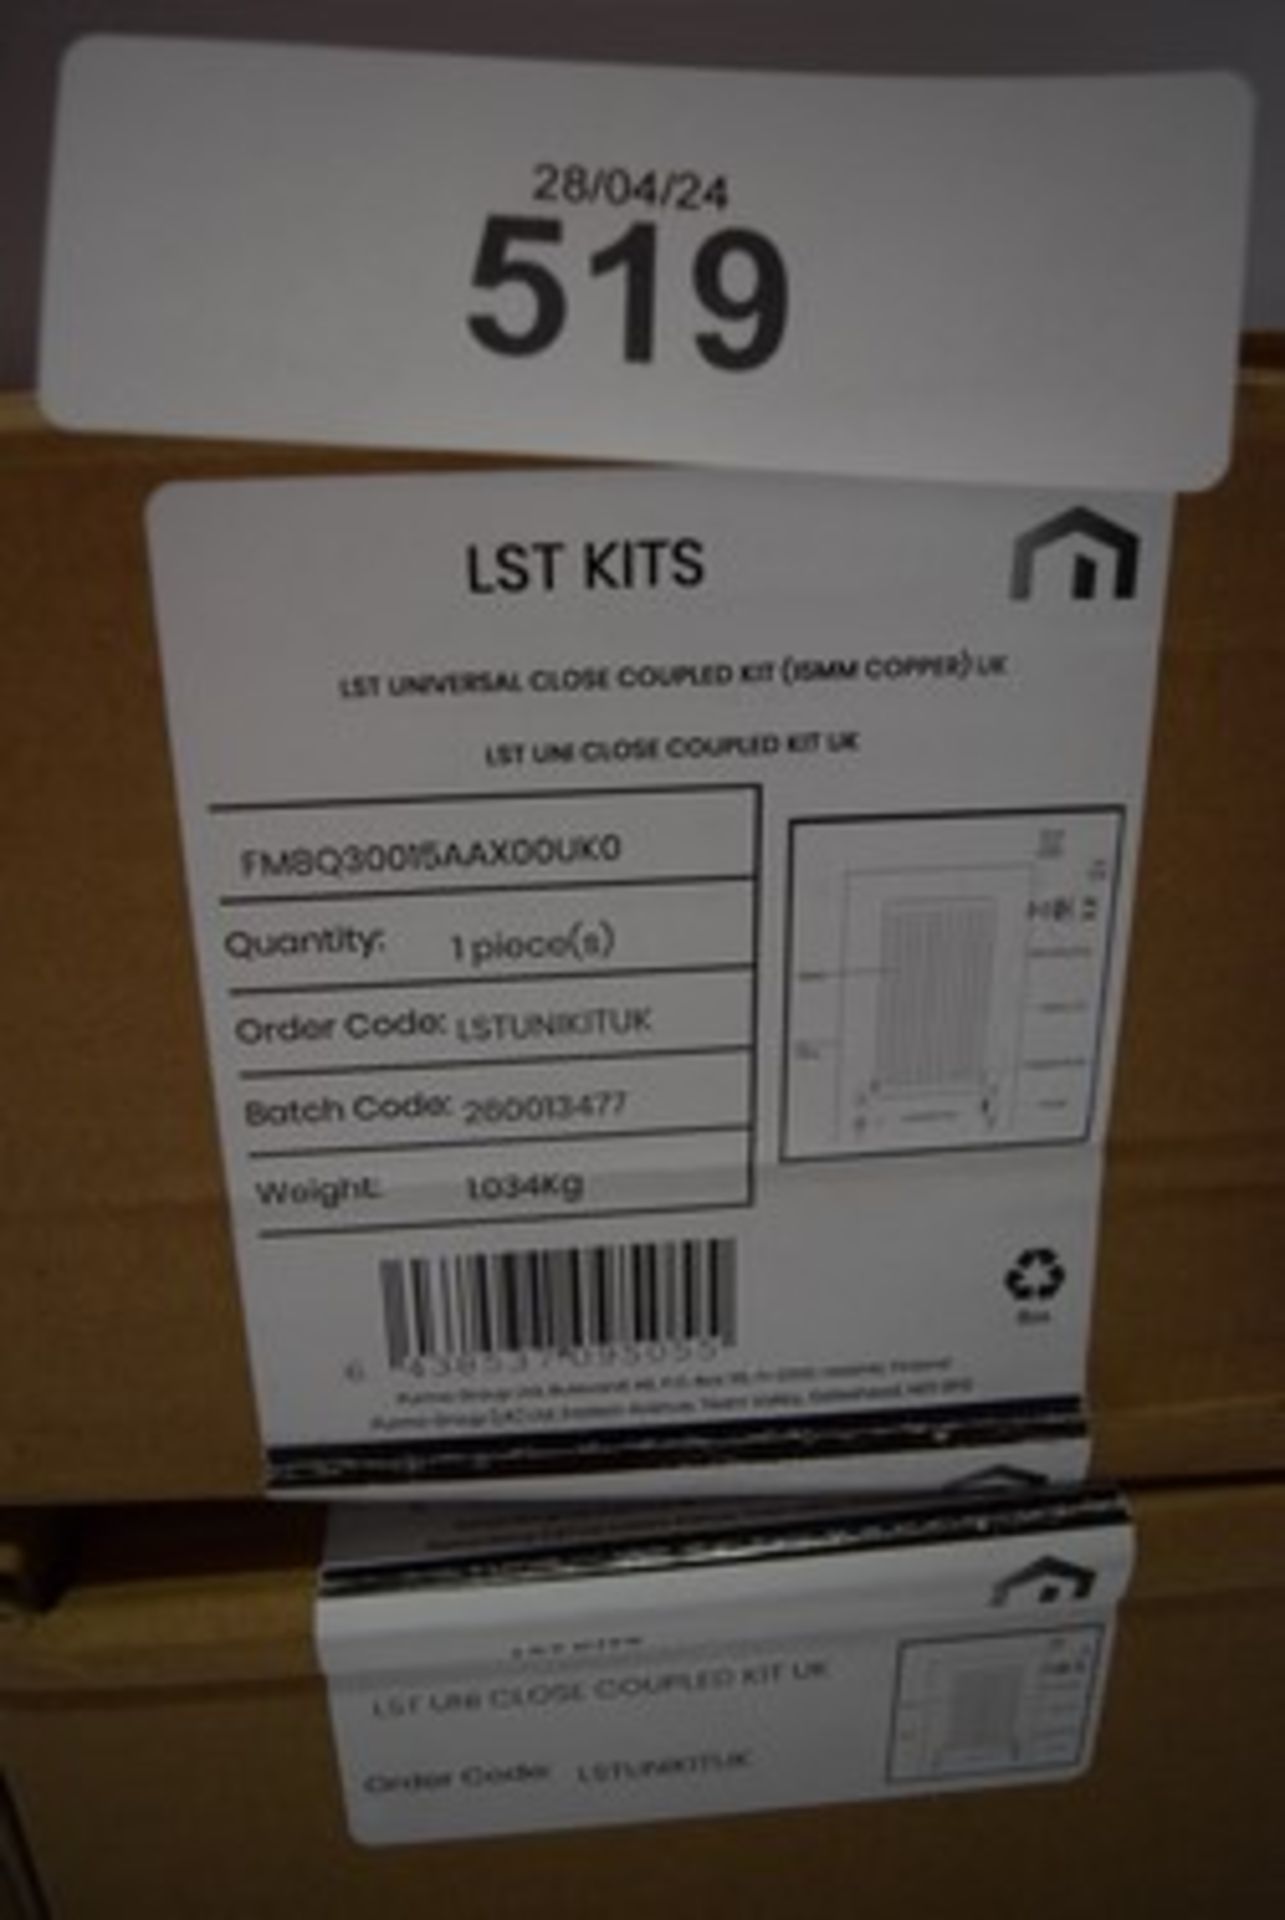 5 x Myson LST universal close coupled thermostatic radiator valve kits, item No: LSTUNIKITUK - new - Image 2 of 3